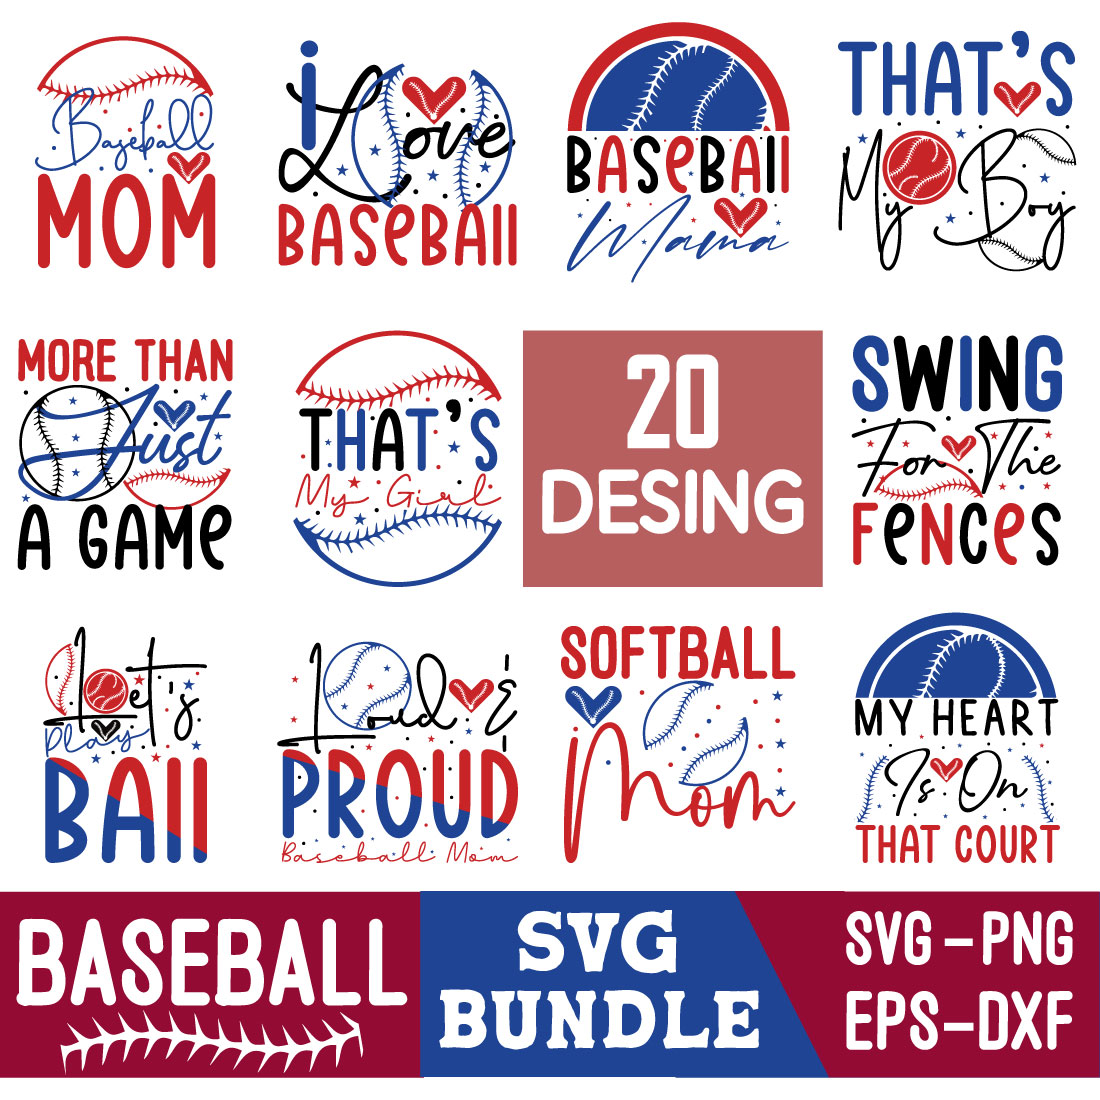 Baseball Svg Bundle cover image.